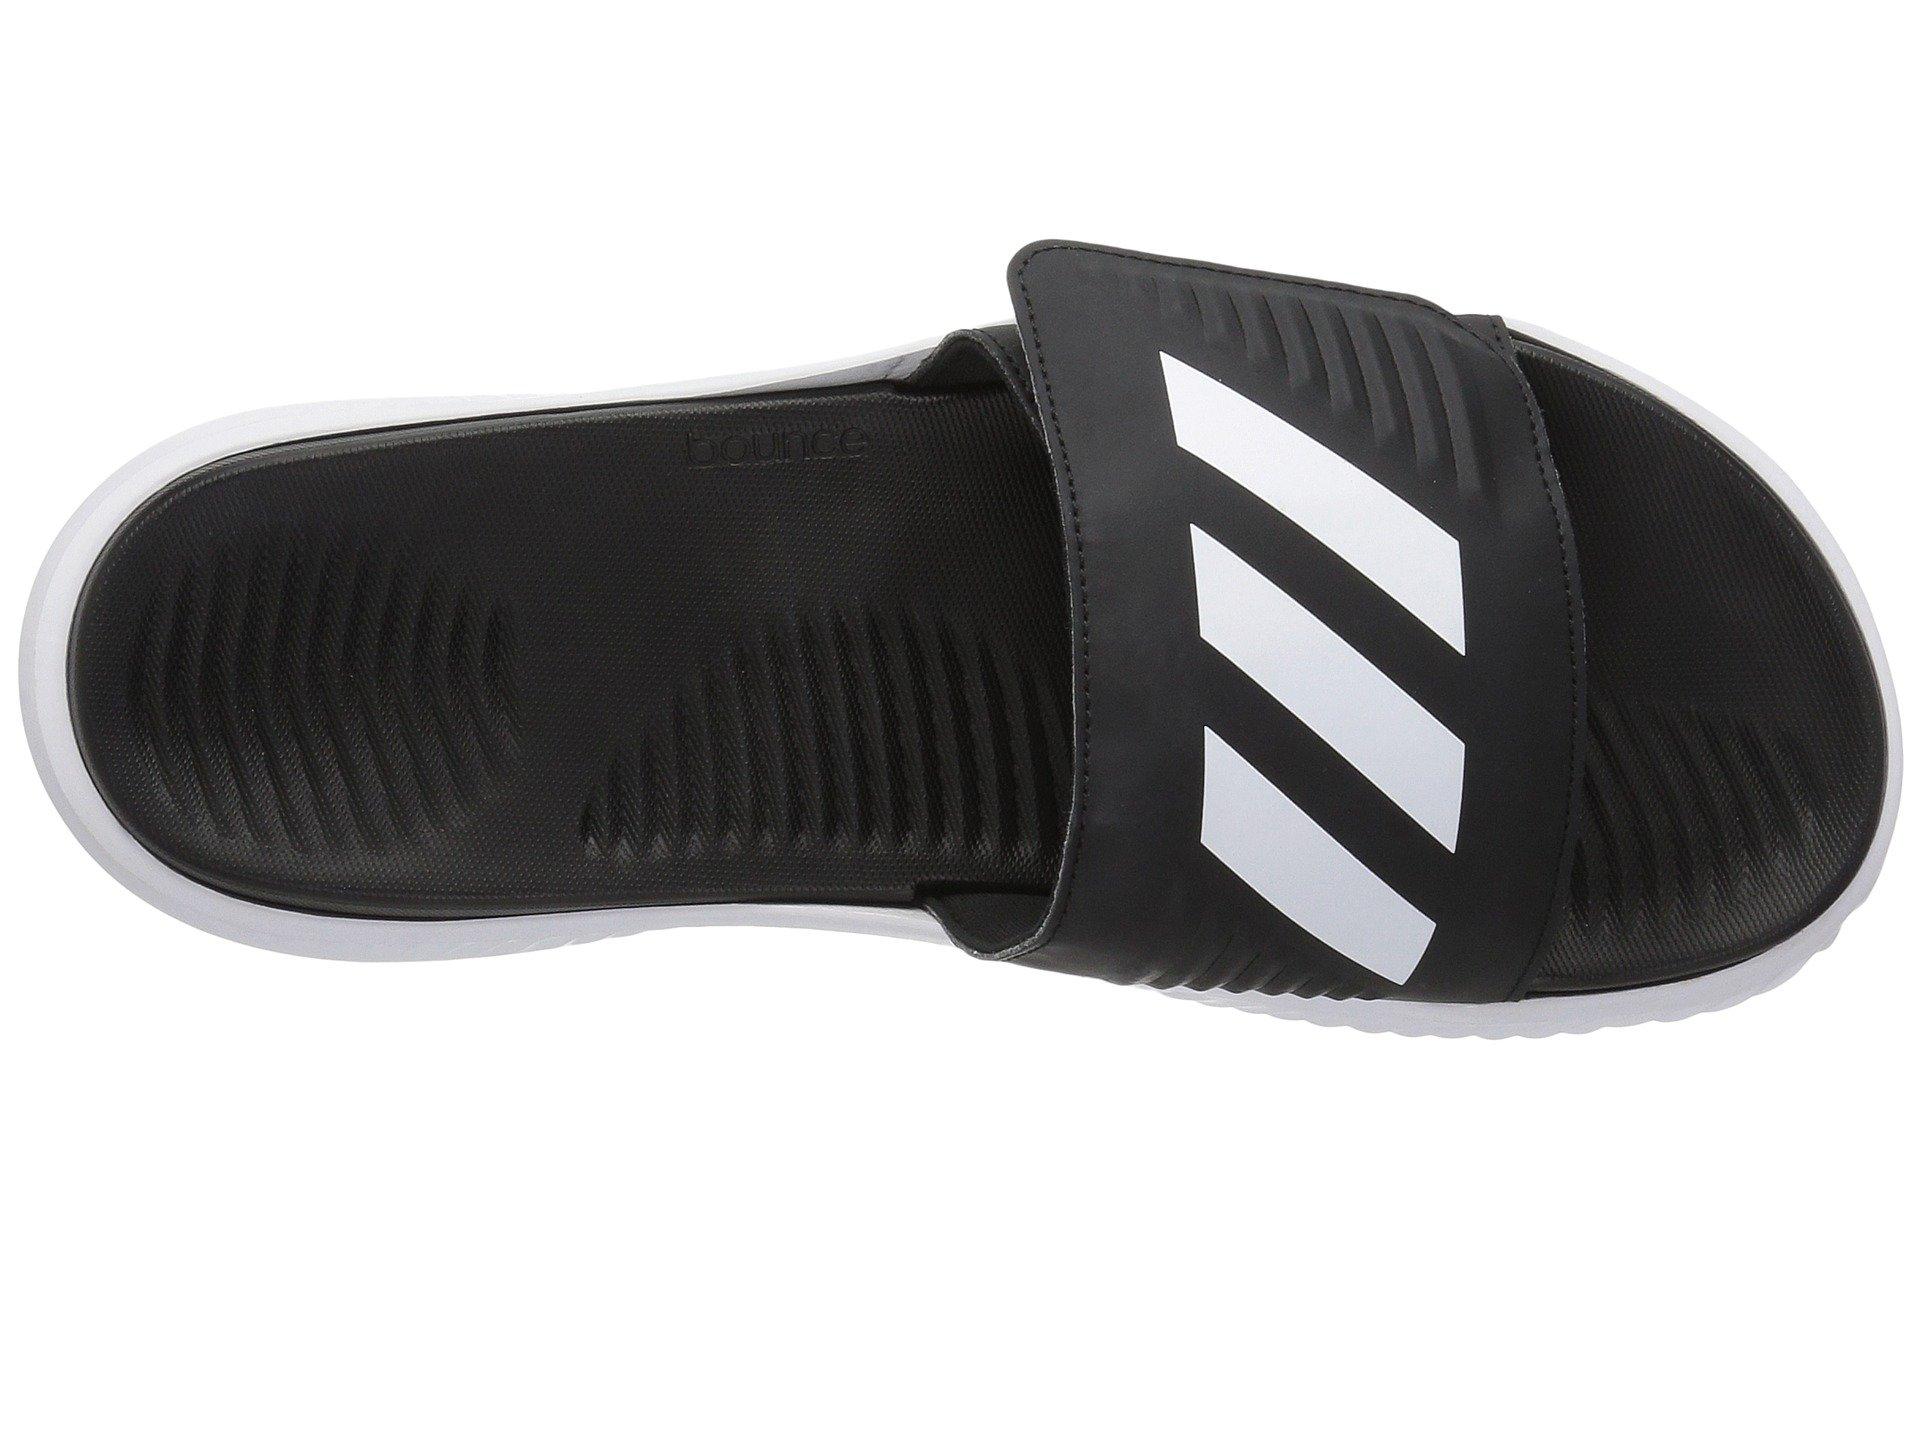 adidas alphabounce men's slide sandals